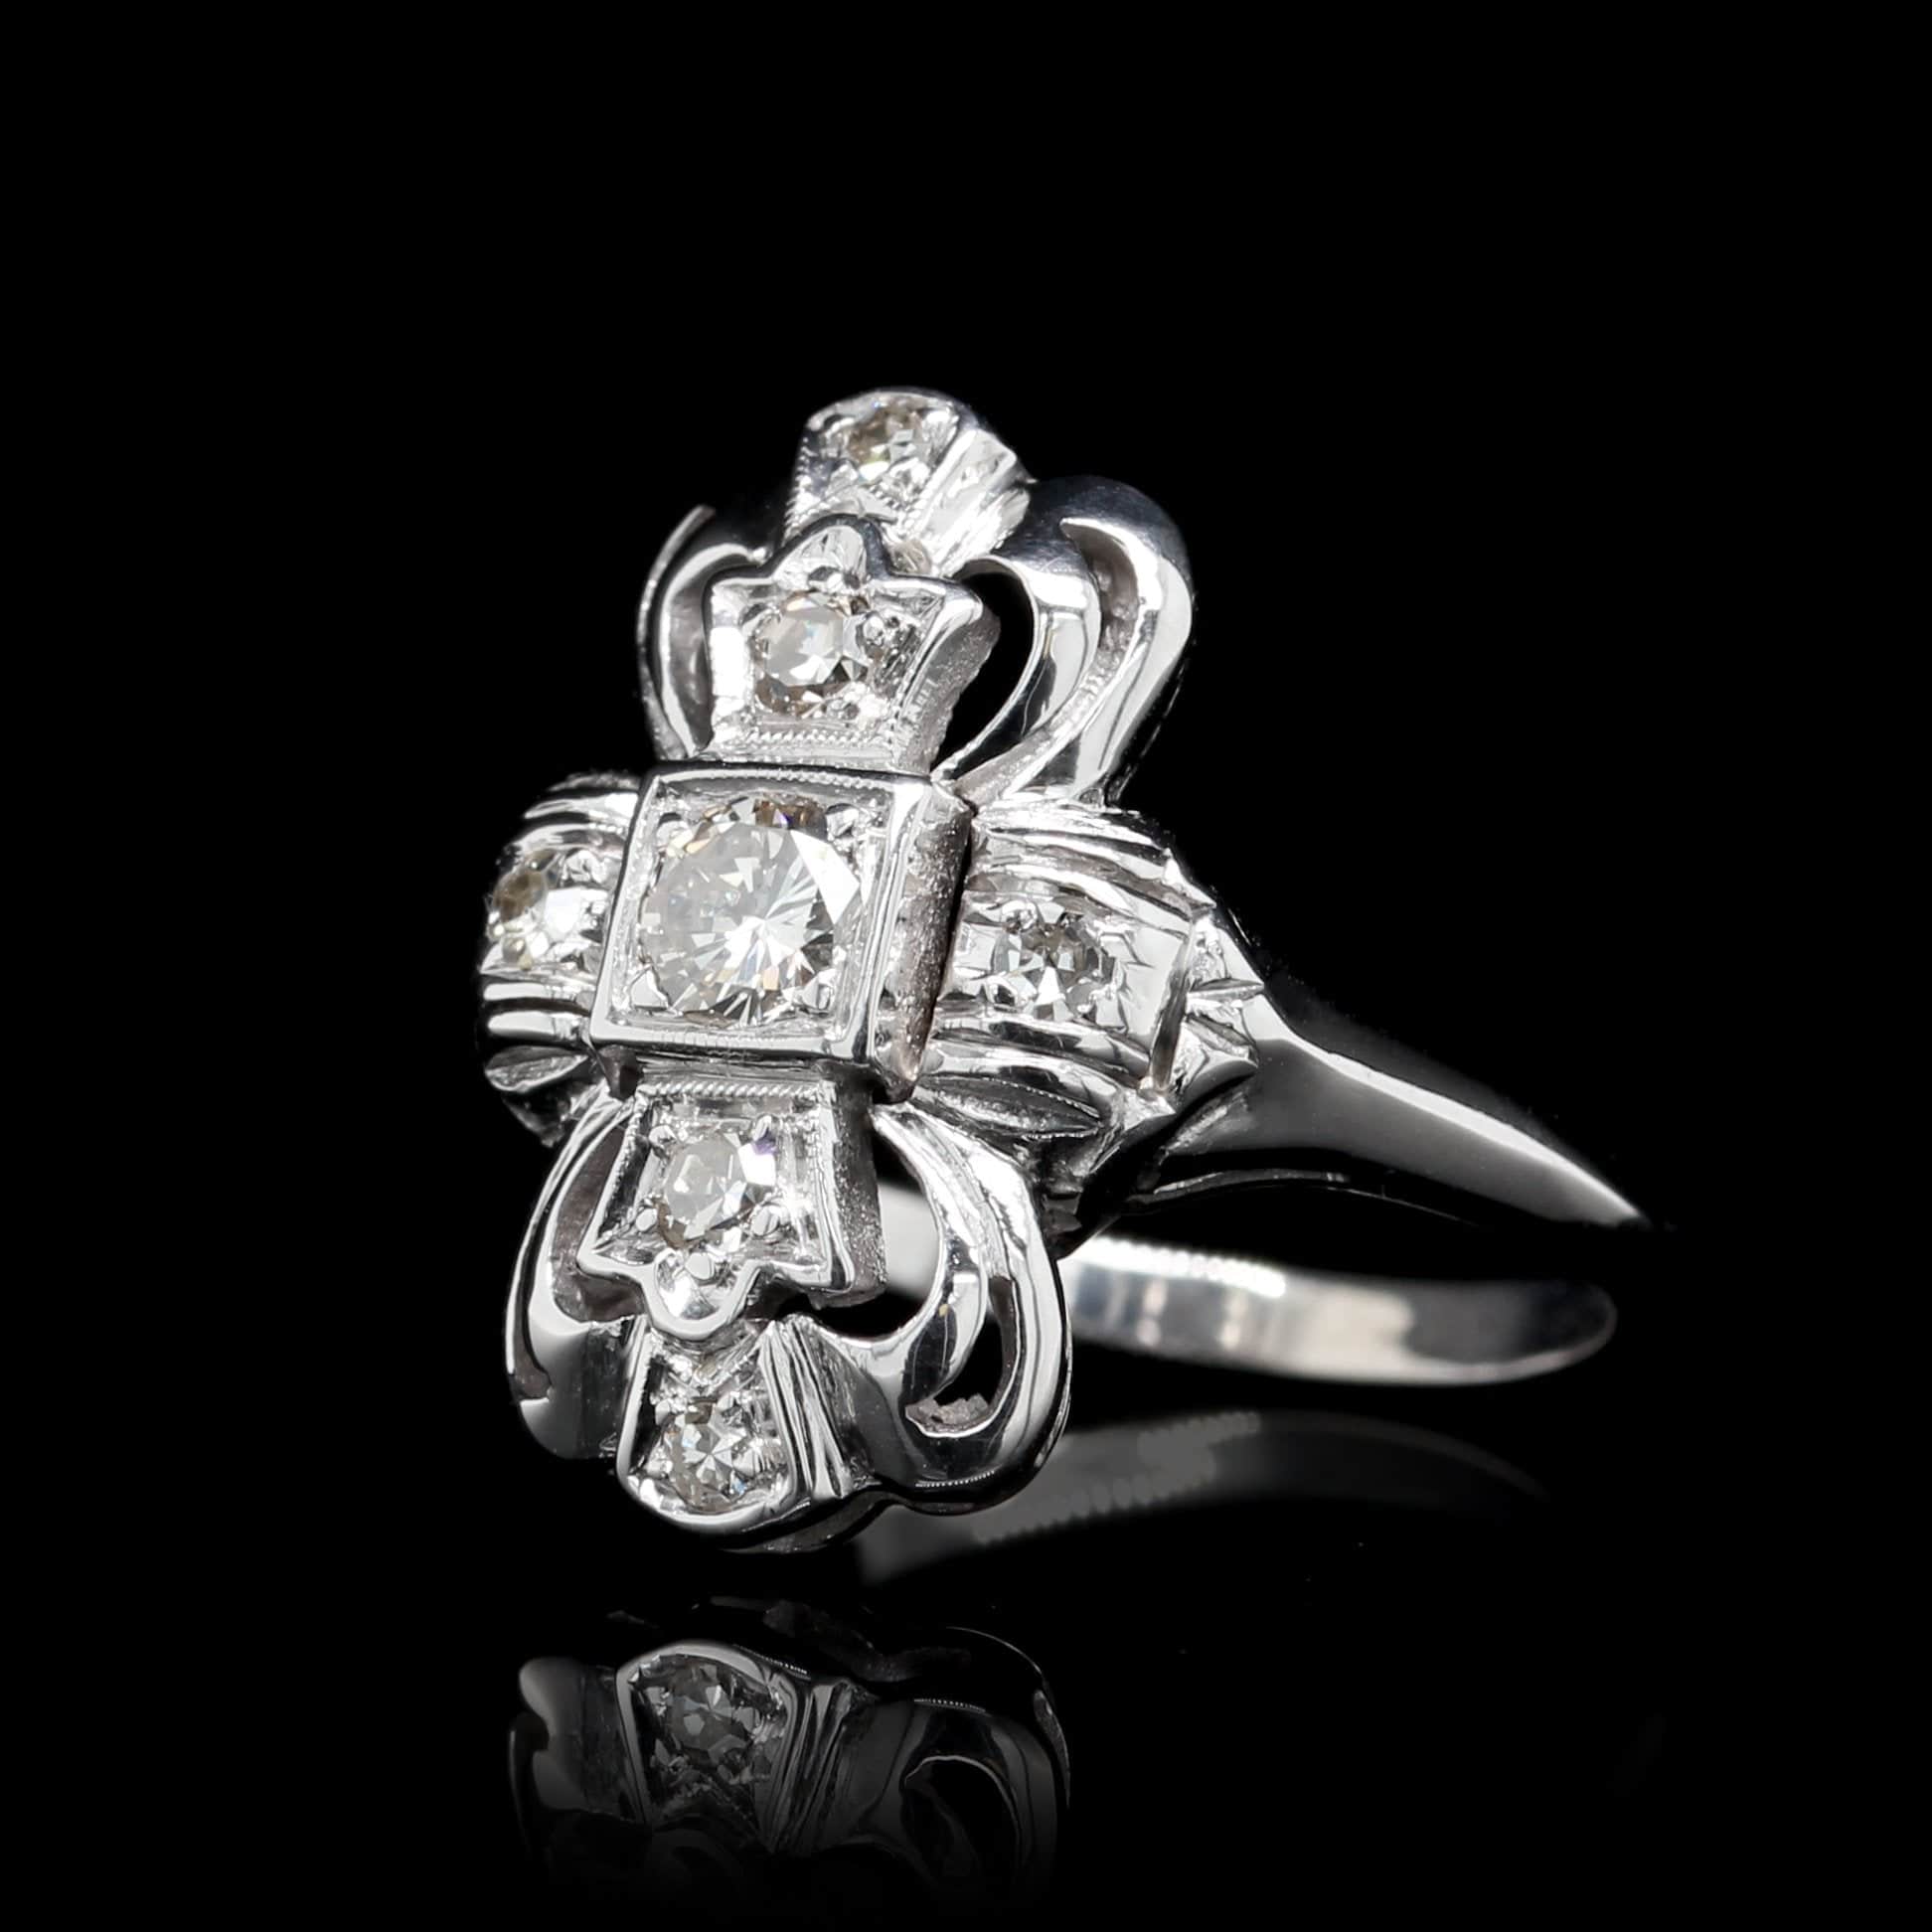 Vintage 14K White Gold Diamond Ring.